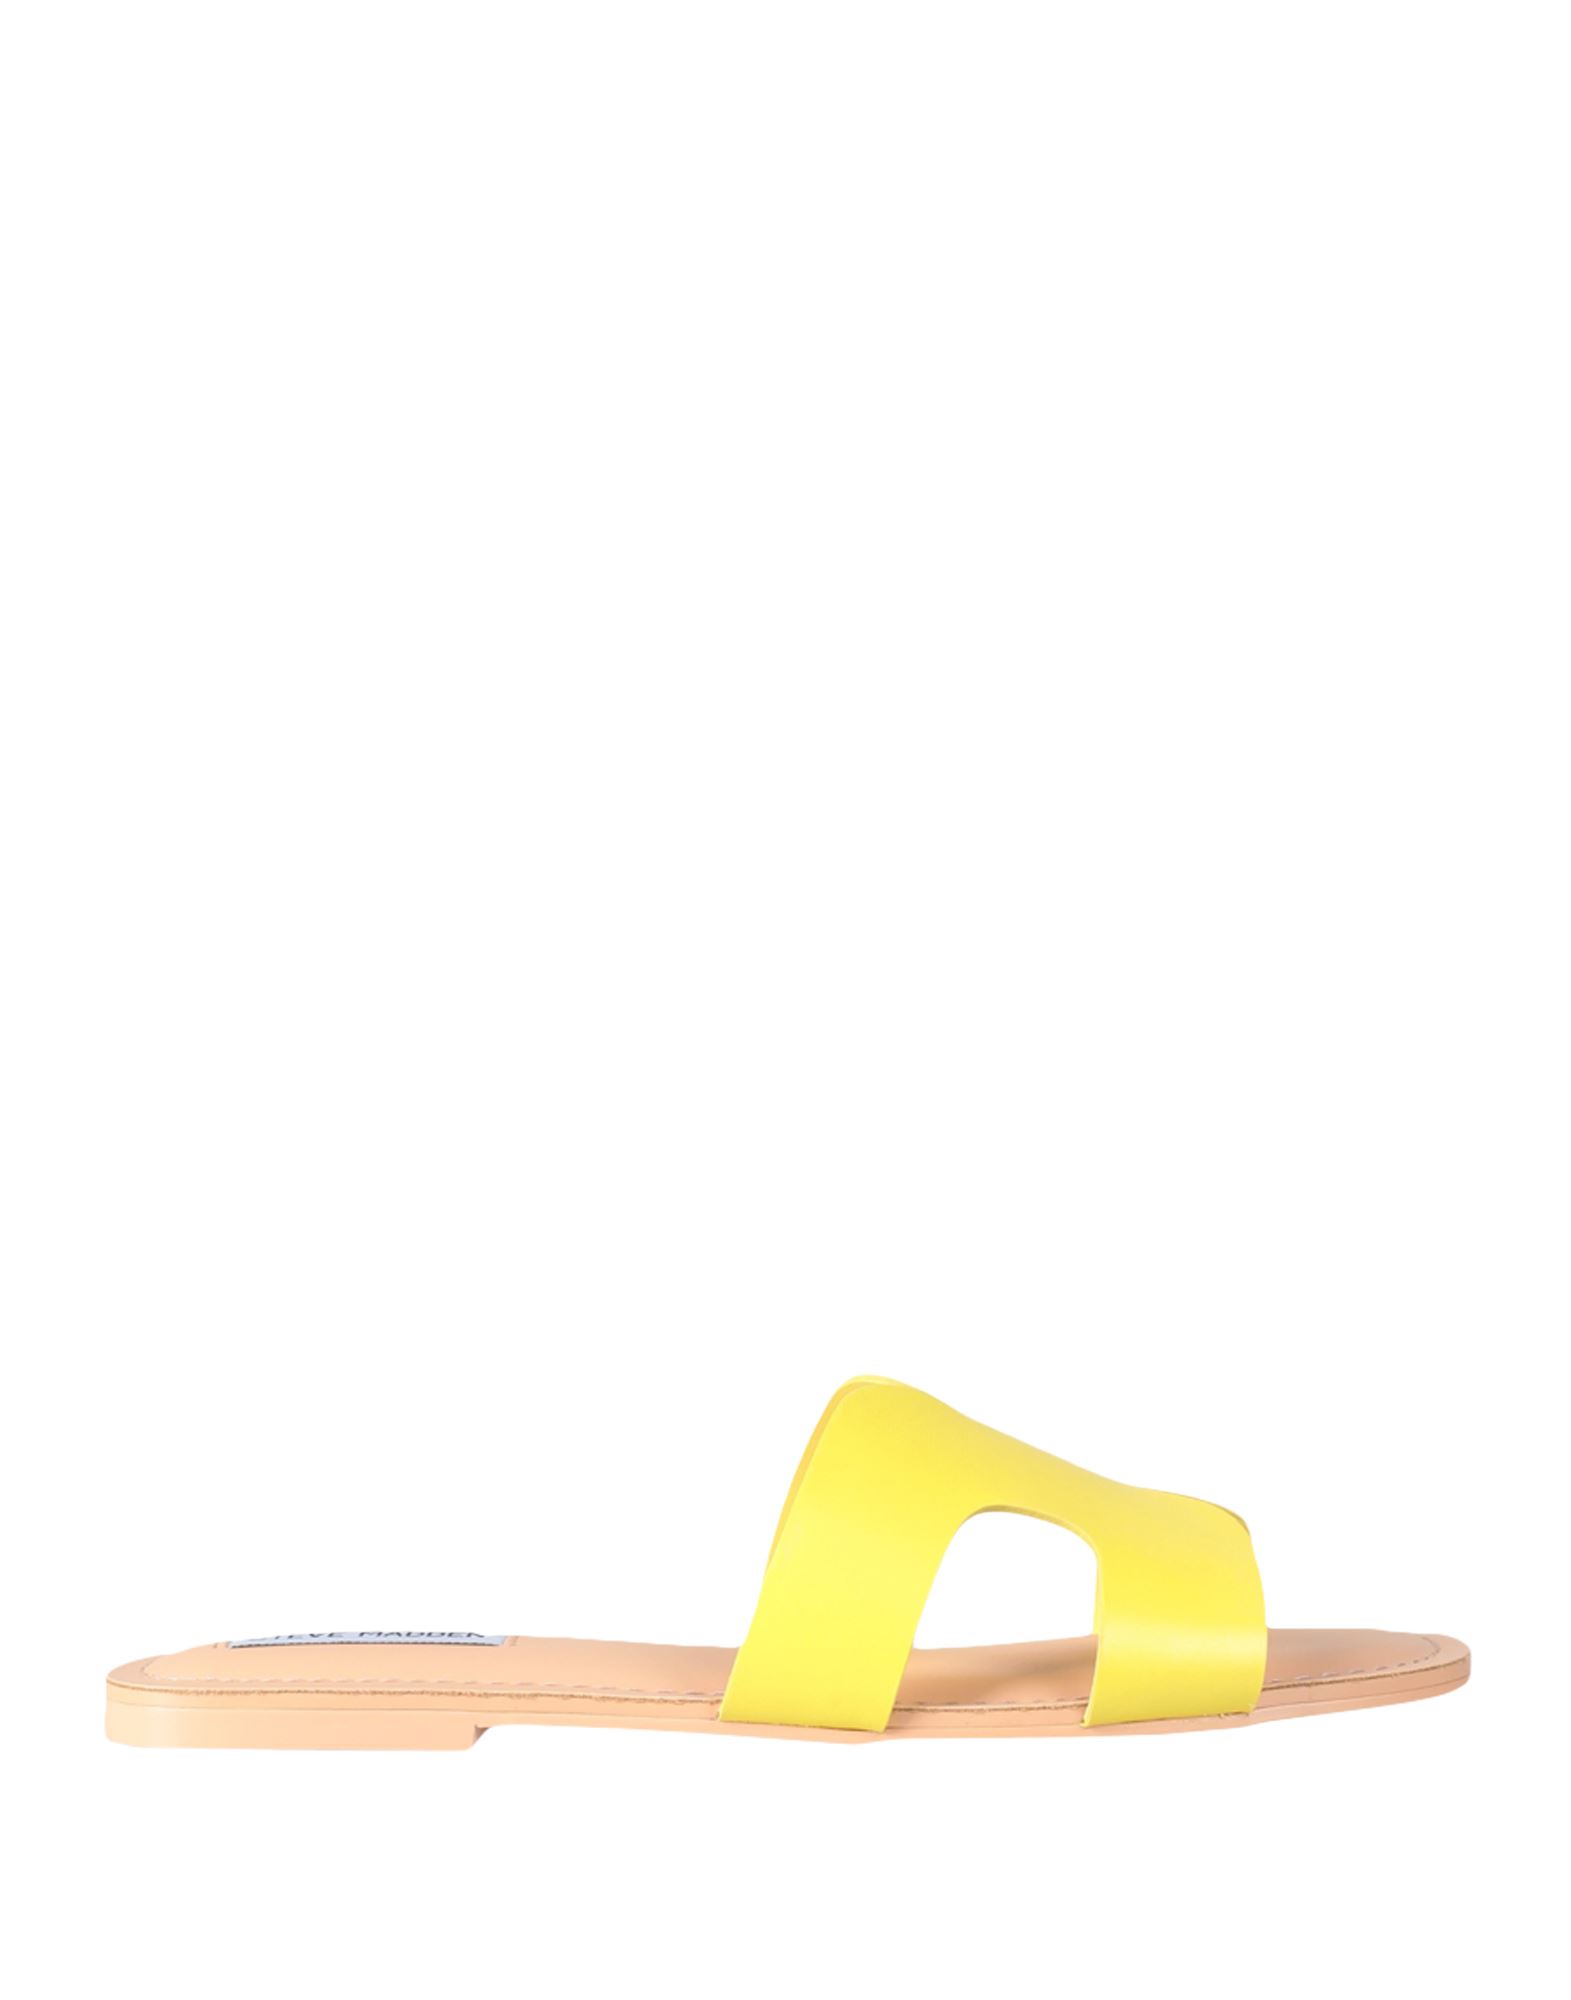 Steve Madden Sandals In Yellow